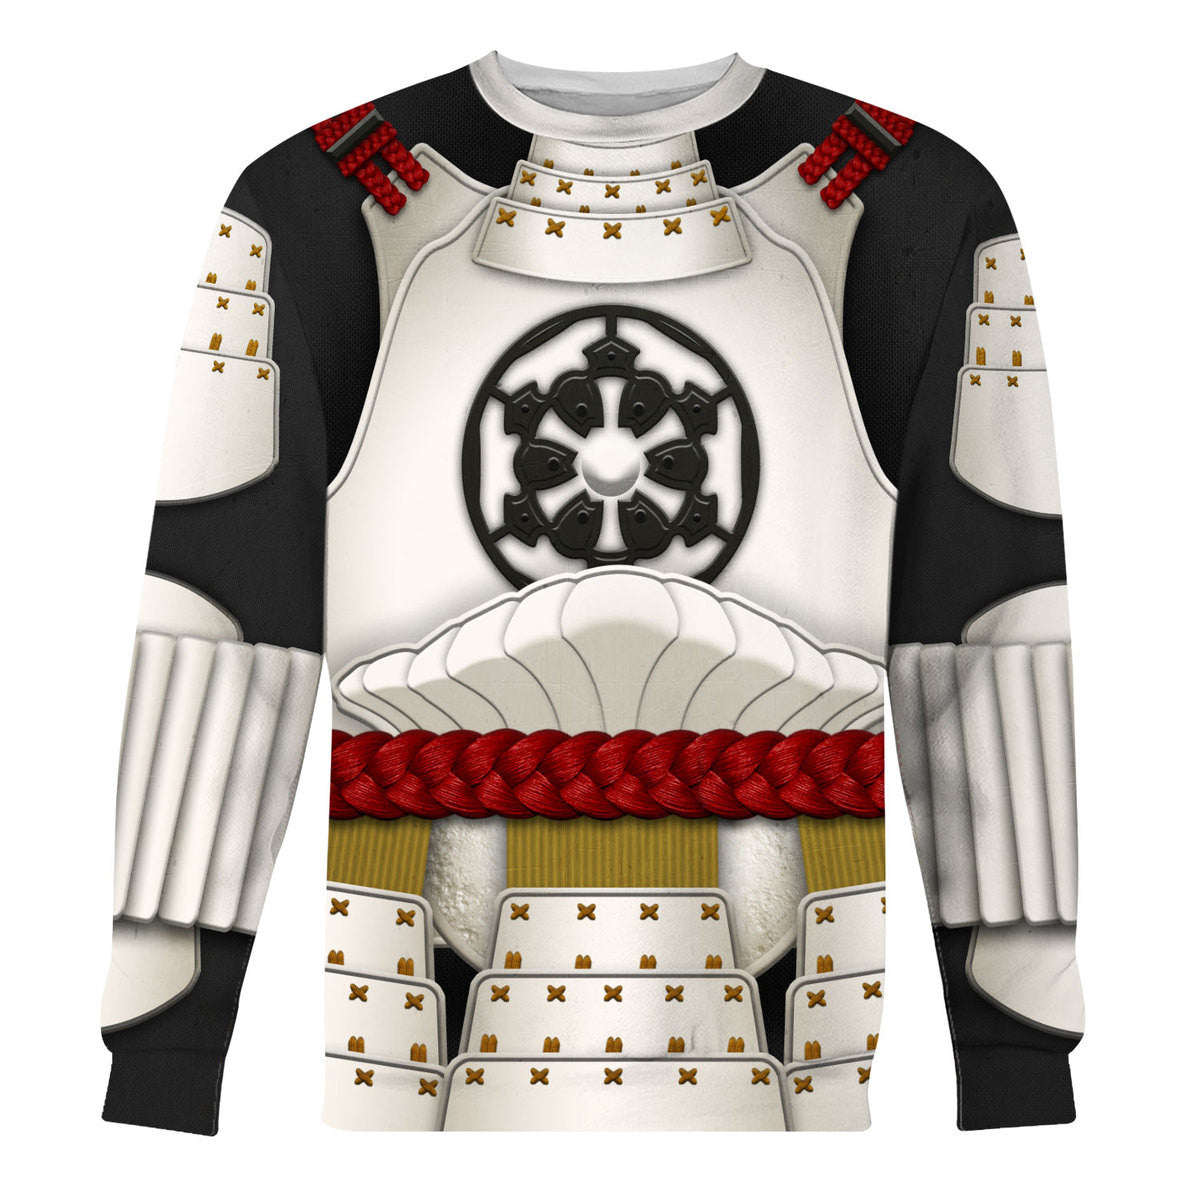 Star Wars Trooper Samurai Costume - Sweater - Ugly Christmas Sweater